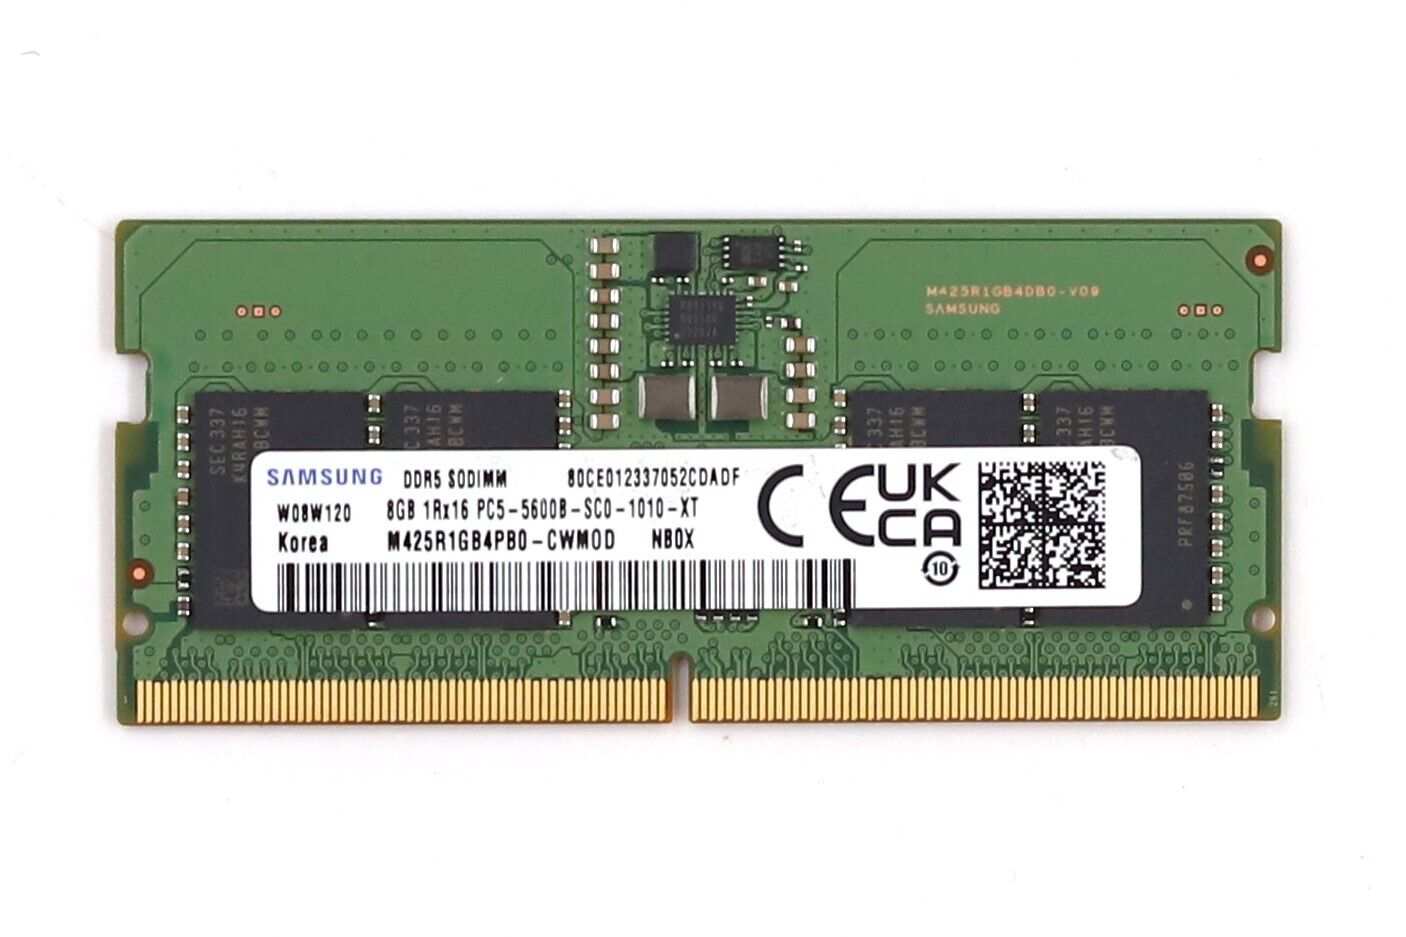 Samsung 8GB 1Rx16 PC5-5600B-SC0-1010-XT Laptop Memory M425R1GB4PB0-CWMOD Tested